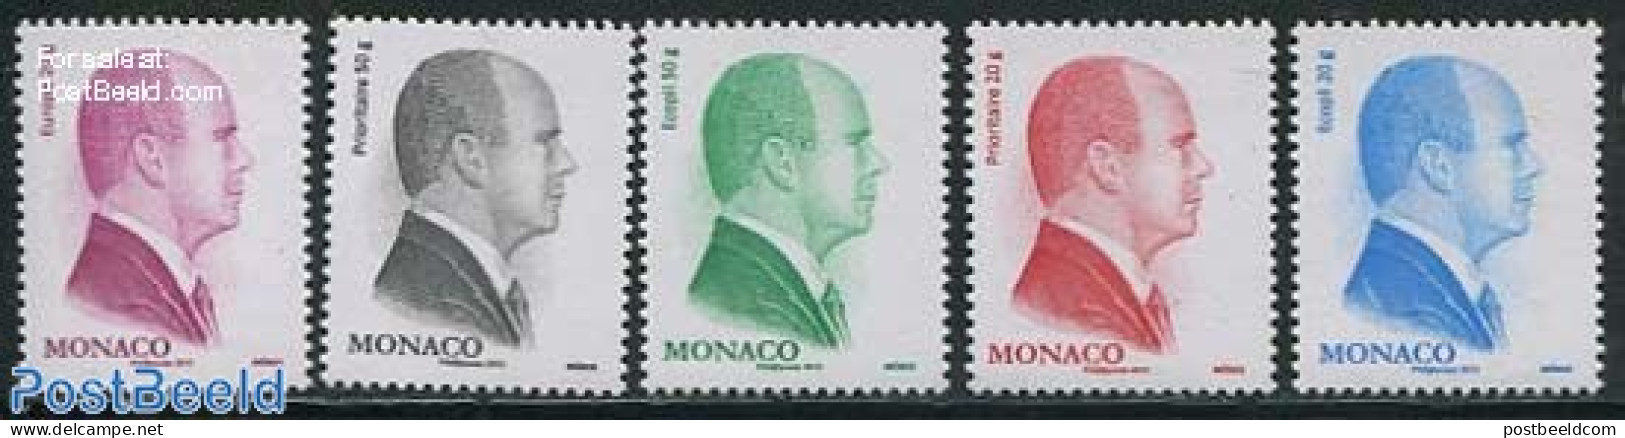 Monaco 2012 Definitives, Albert II 5v, Mint NH - Unused Stamps